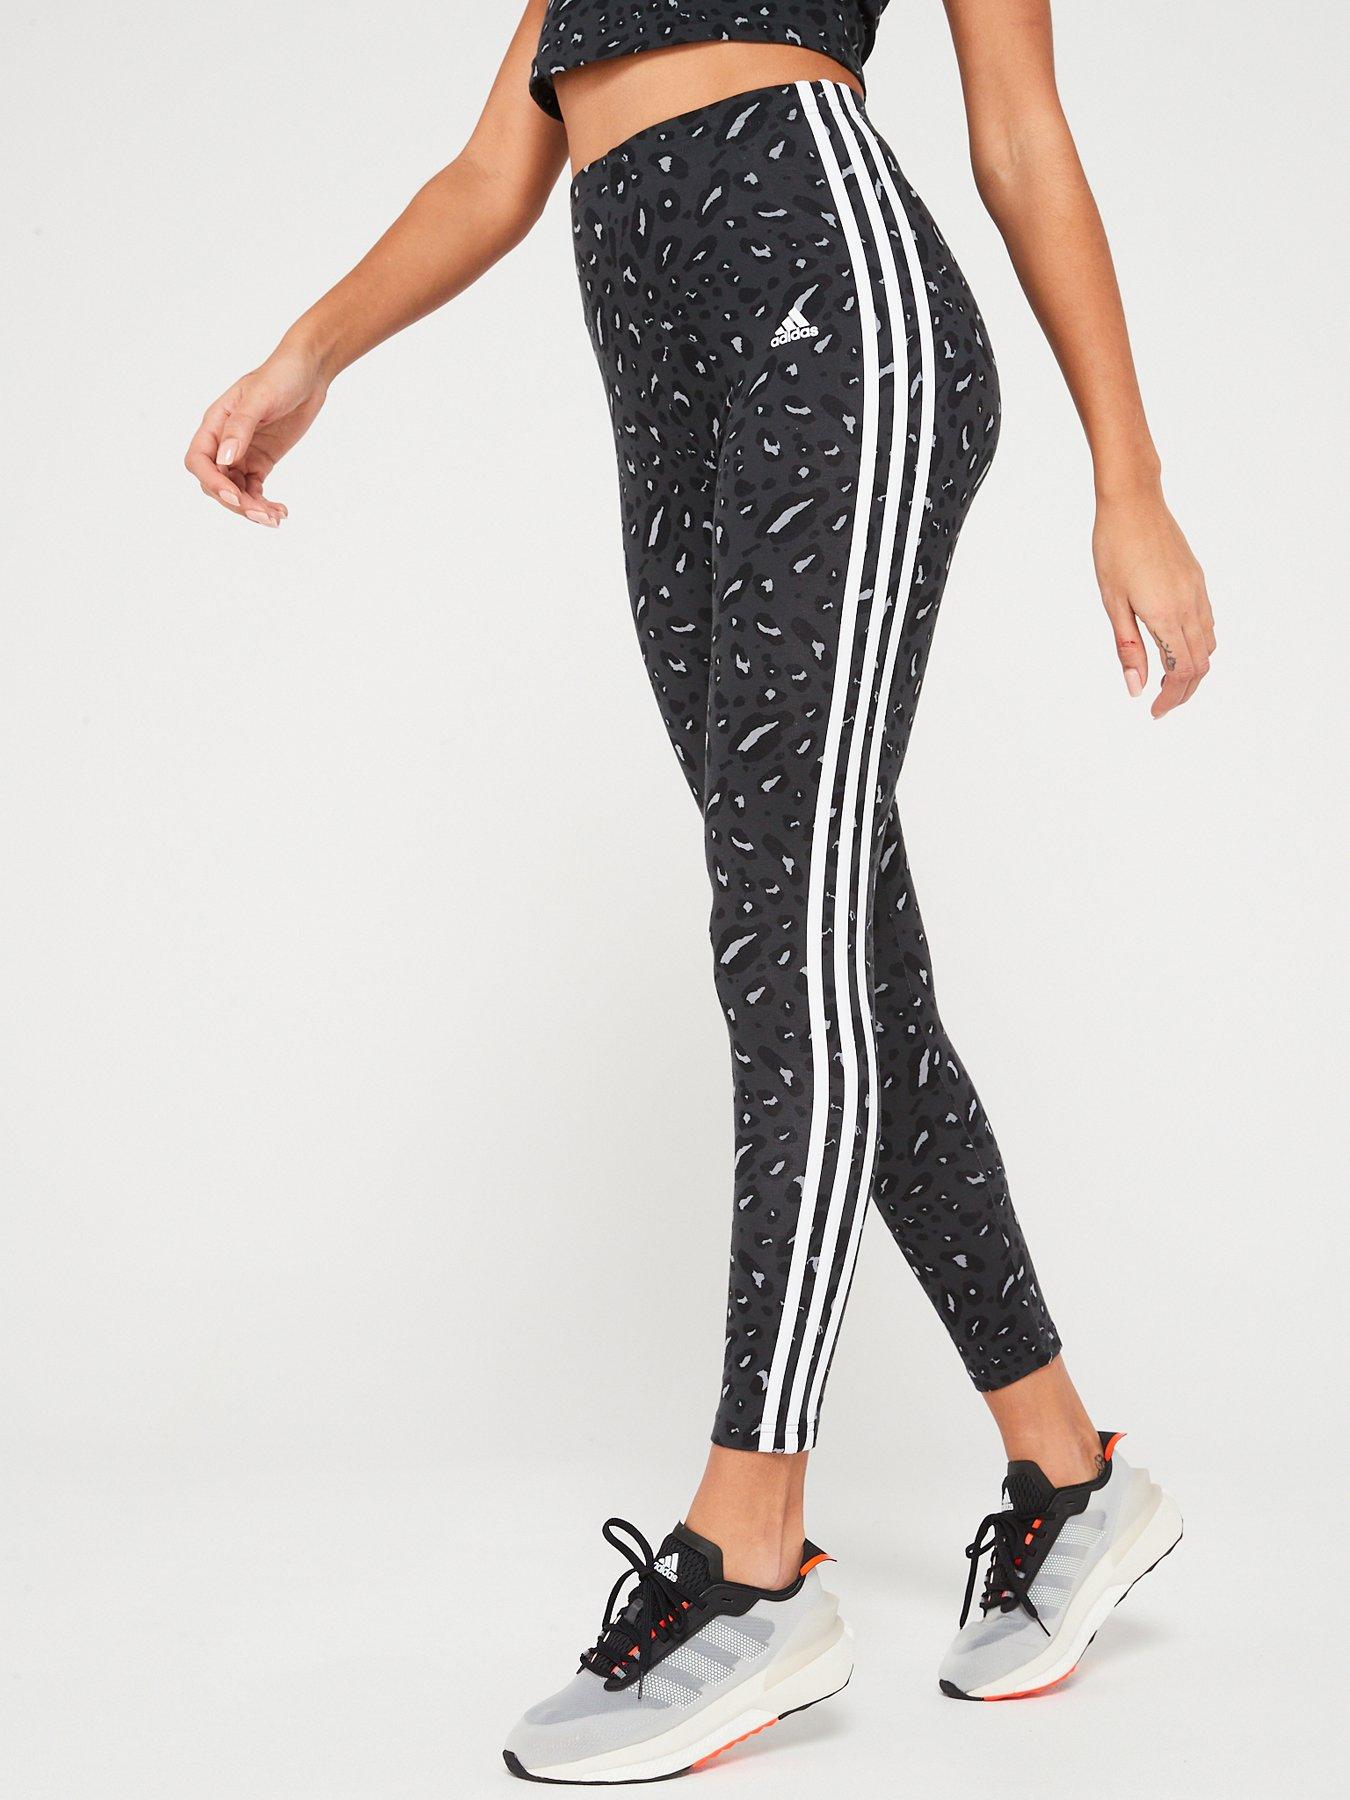 https://media.very.co.uk/i/very/VUEW7_SQ1_0000000005_GREY_MDf/adidas-sportswear-womens-leopard-print-3-stripe-leggings-grey.jpg?$180x240_retinamobilex2$